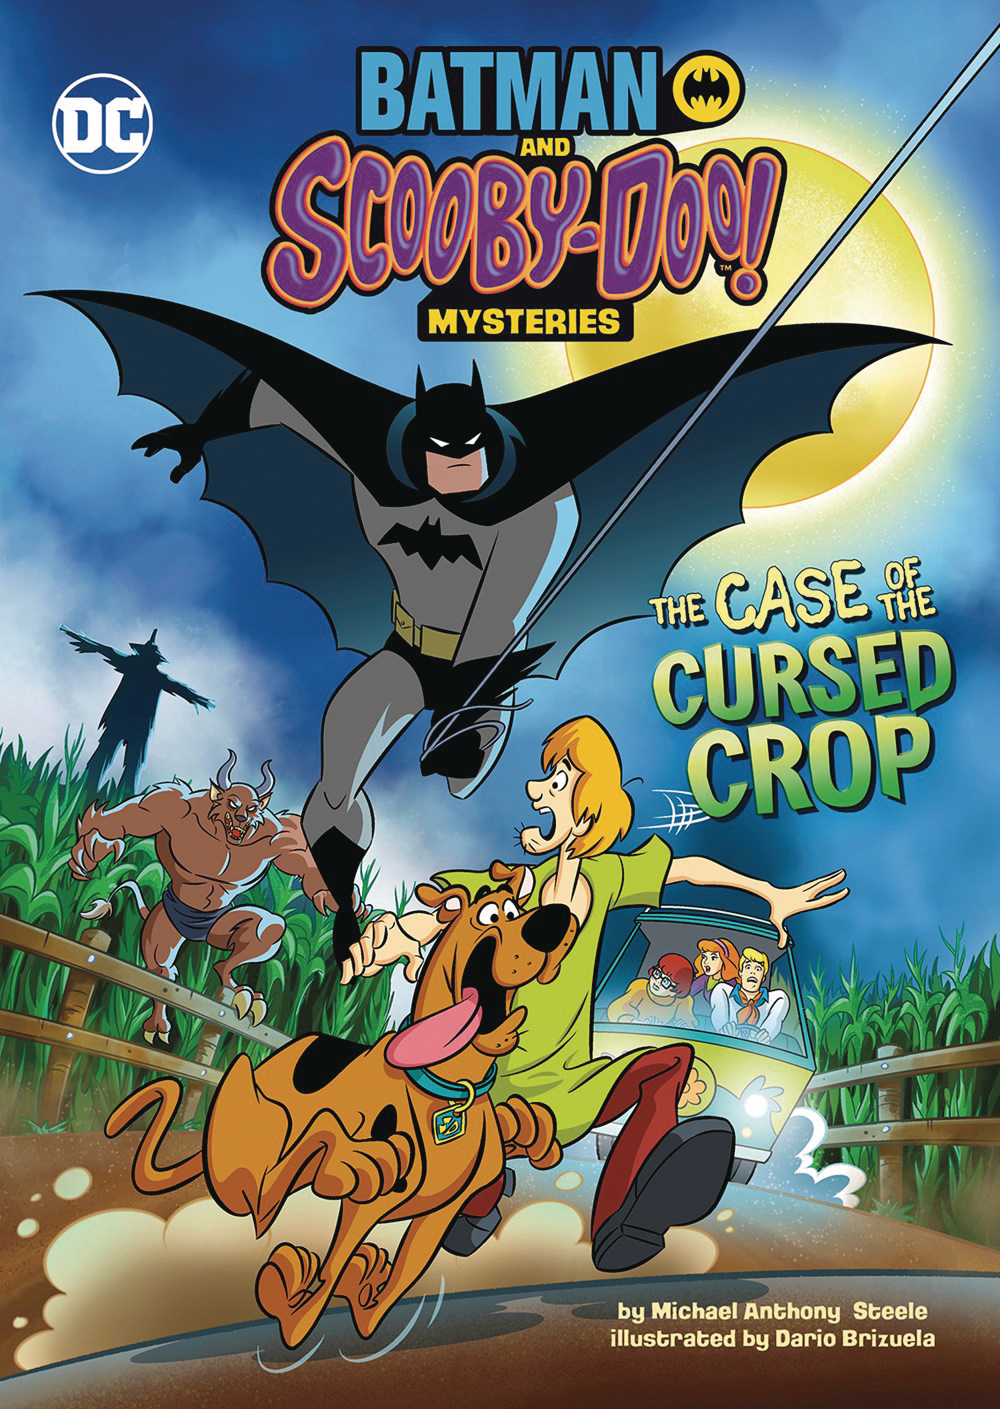 Batman Scooby Doo Mysteries #2 Case of Cursed Crop